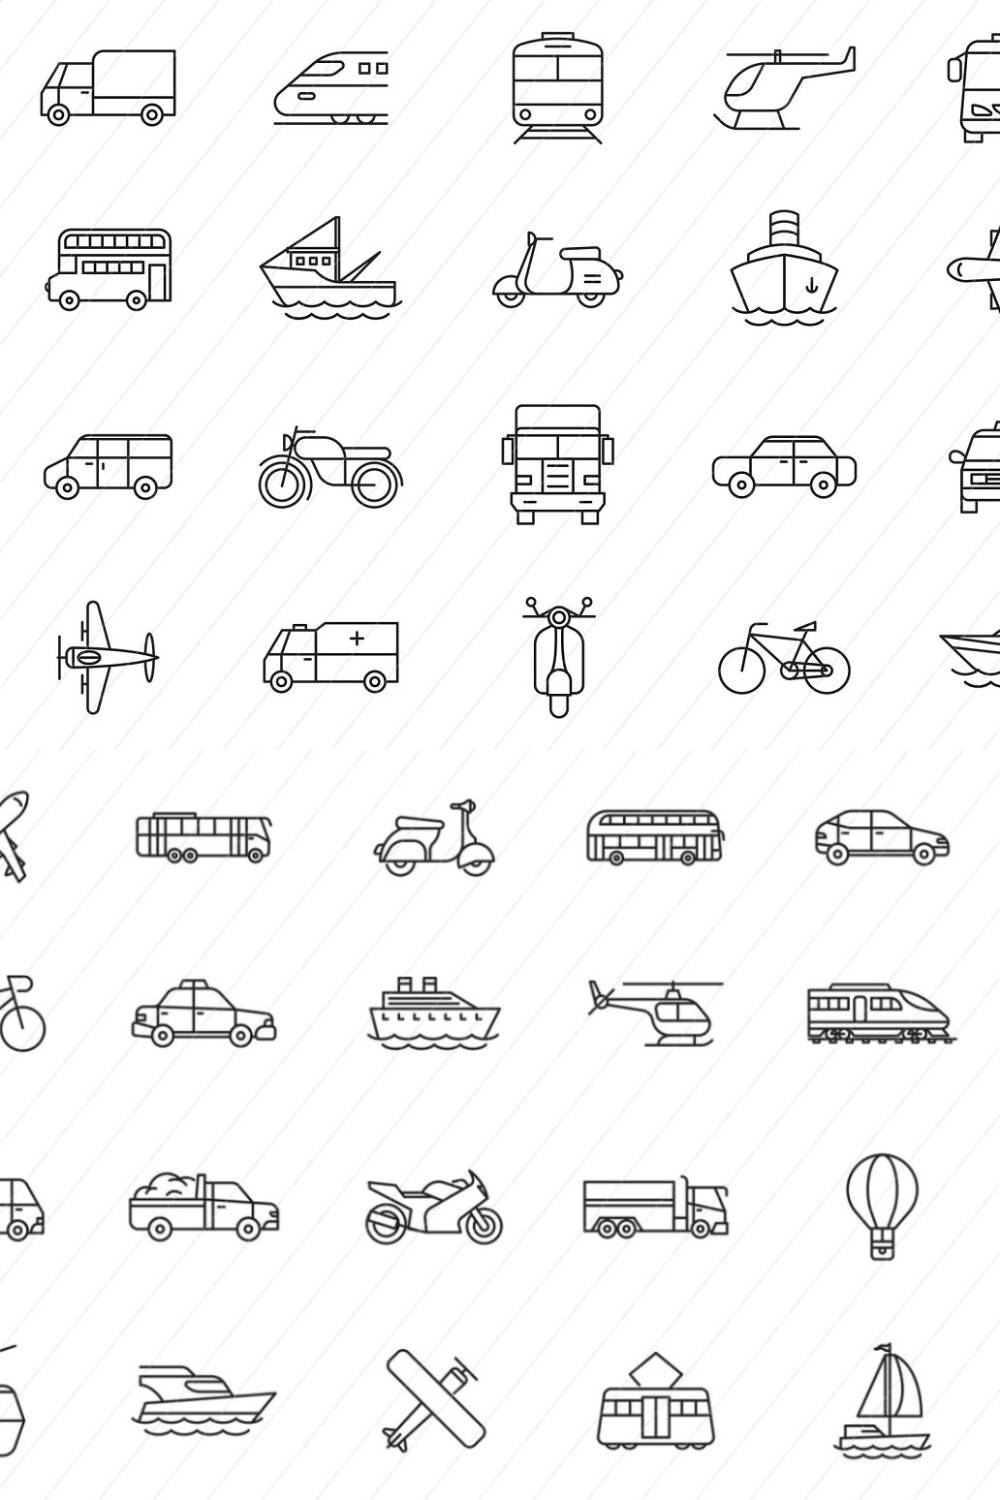 40 Transportation Icons Pinterest Cover.